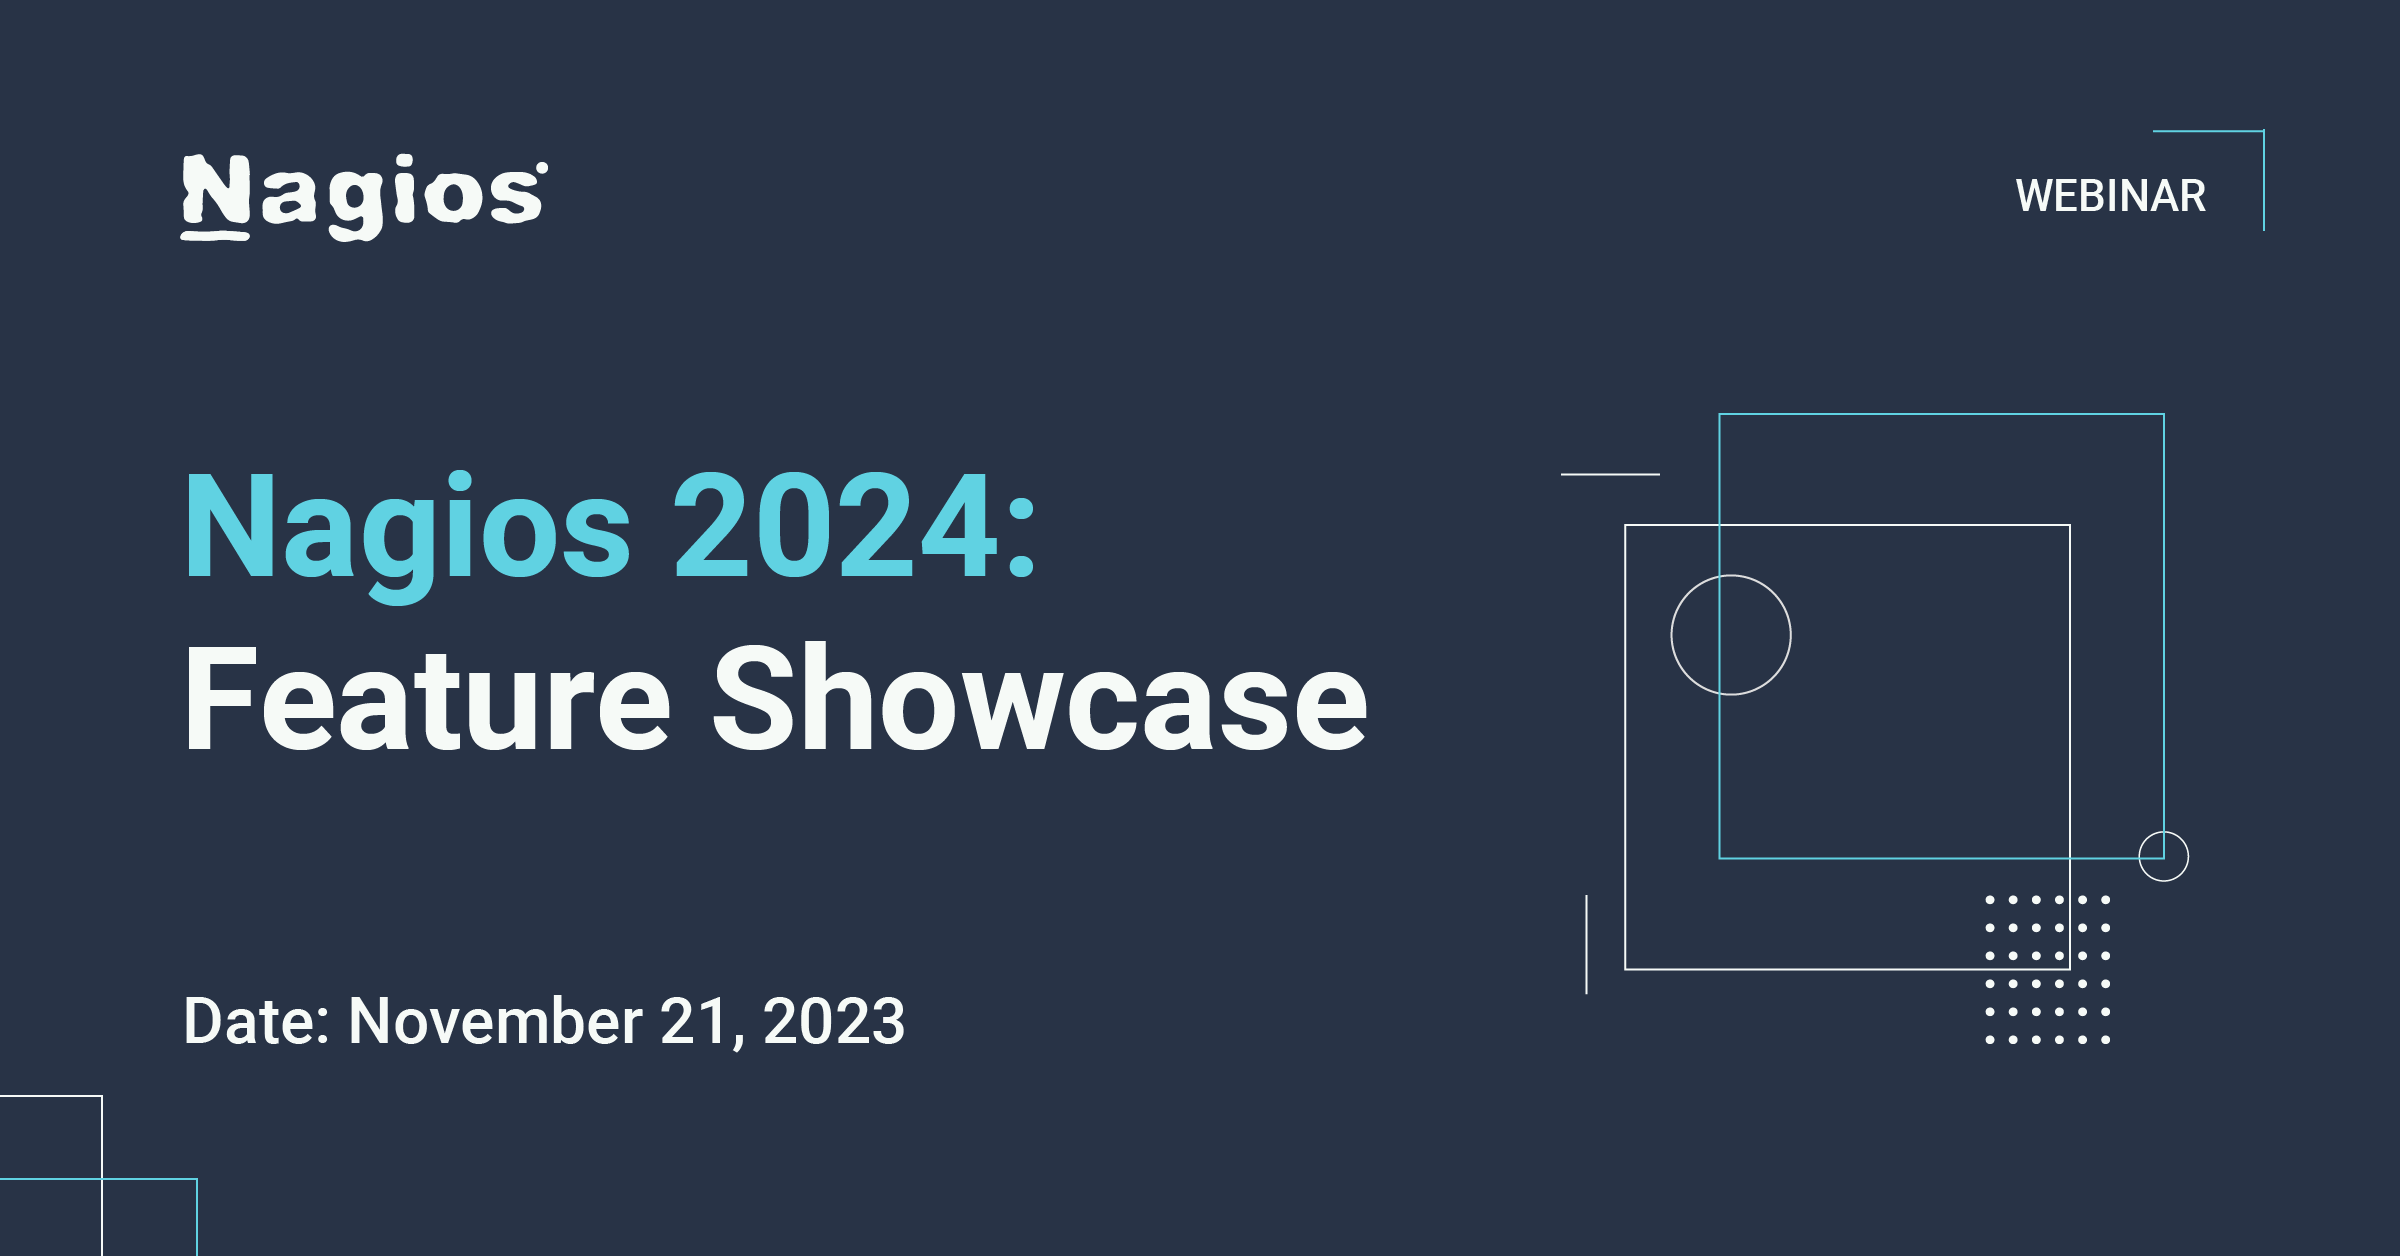 Nagios 2024: Feature Showcase